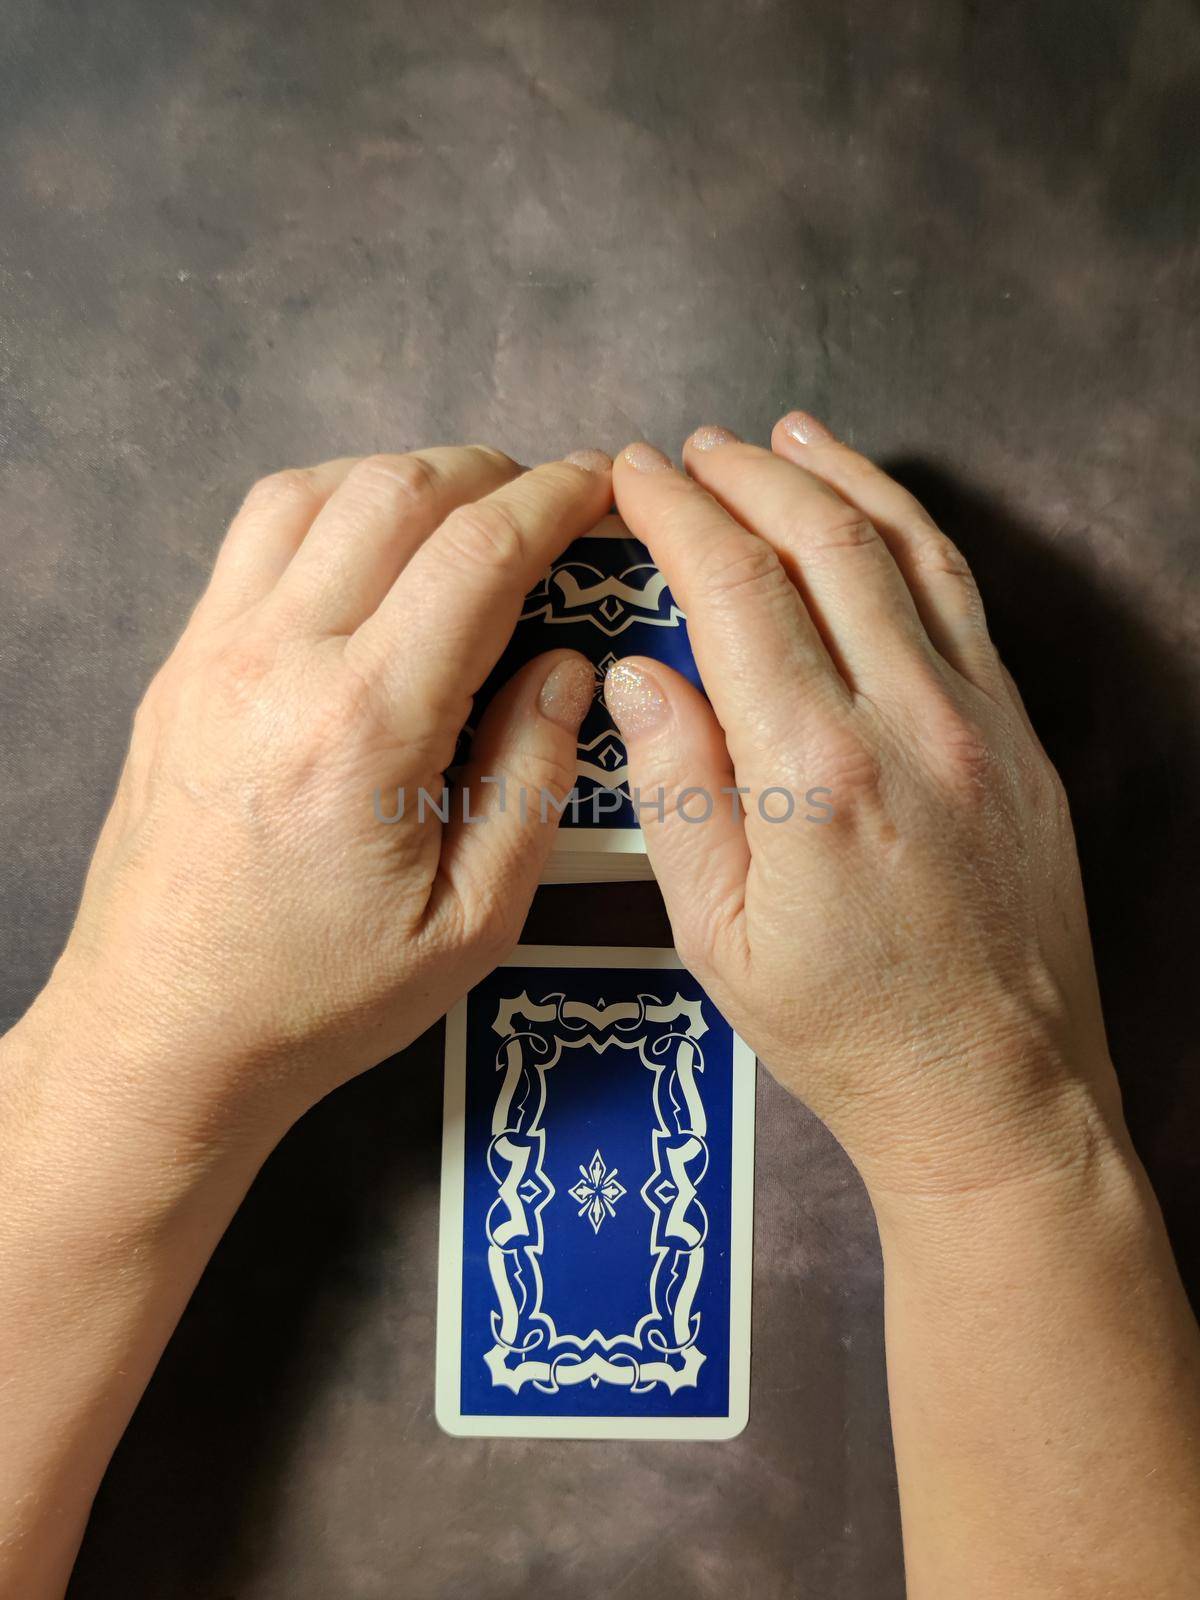 female hands on deck of tarot cards on dark vintage background by Annado